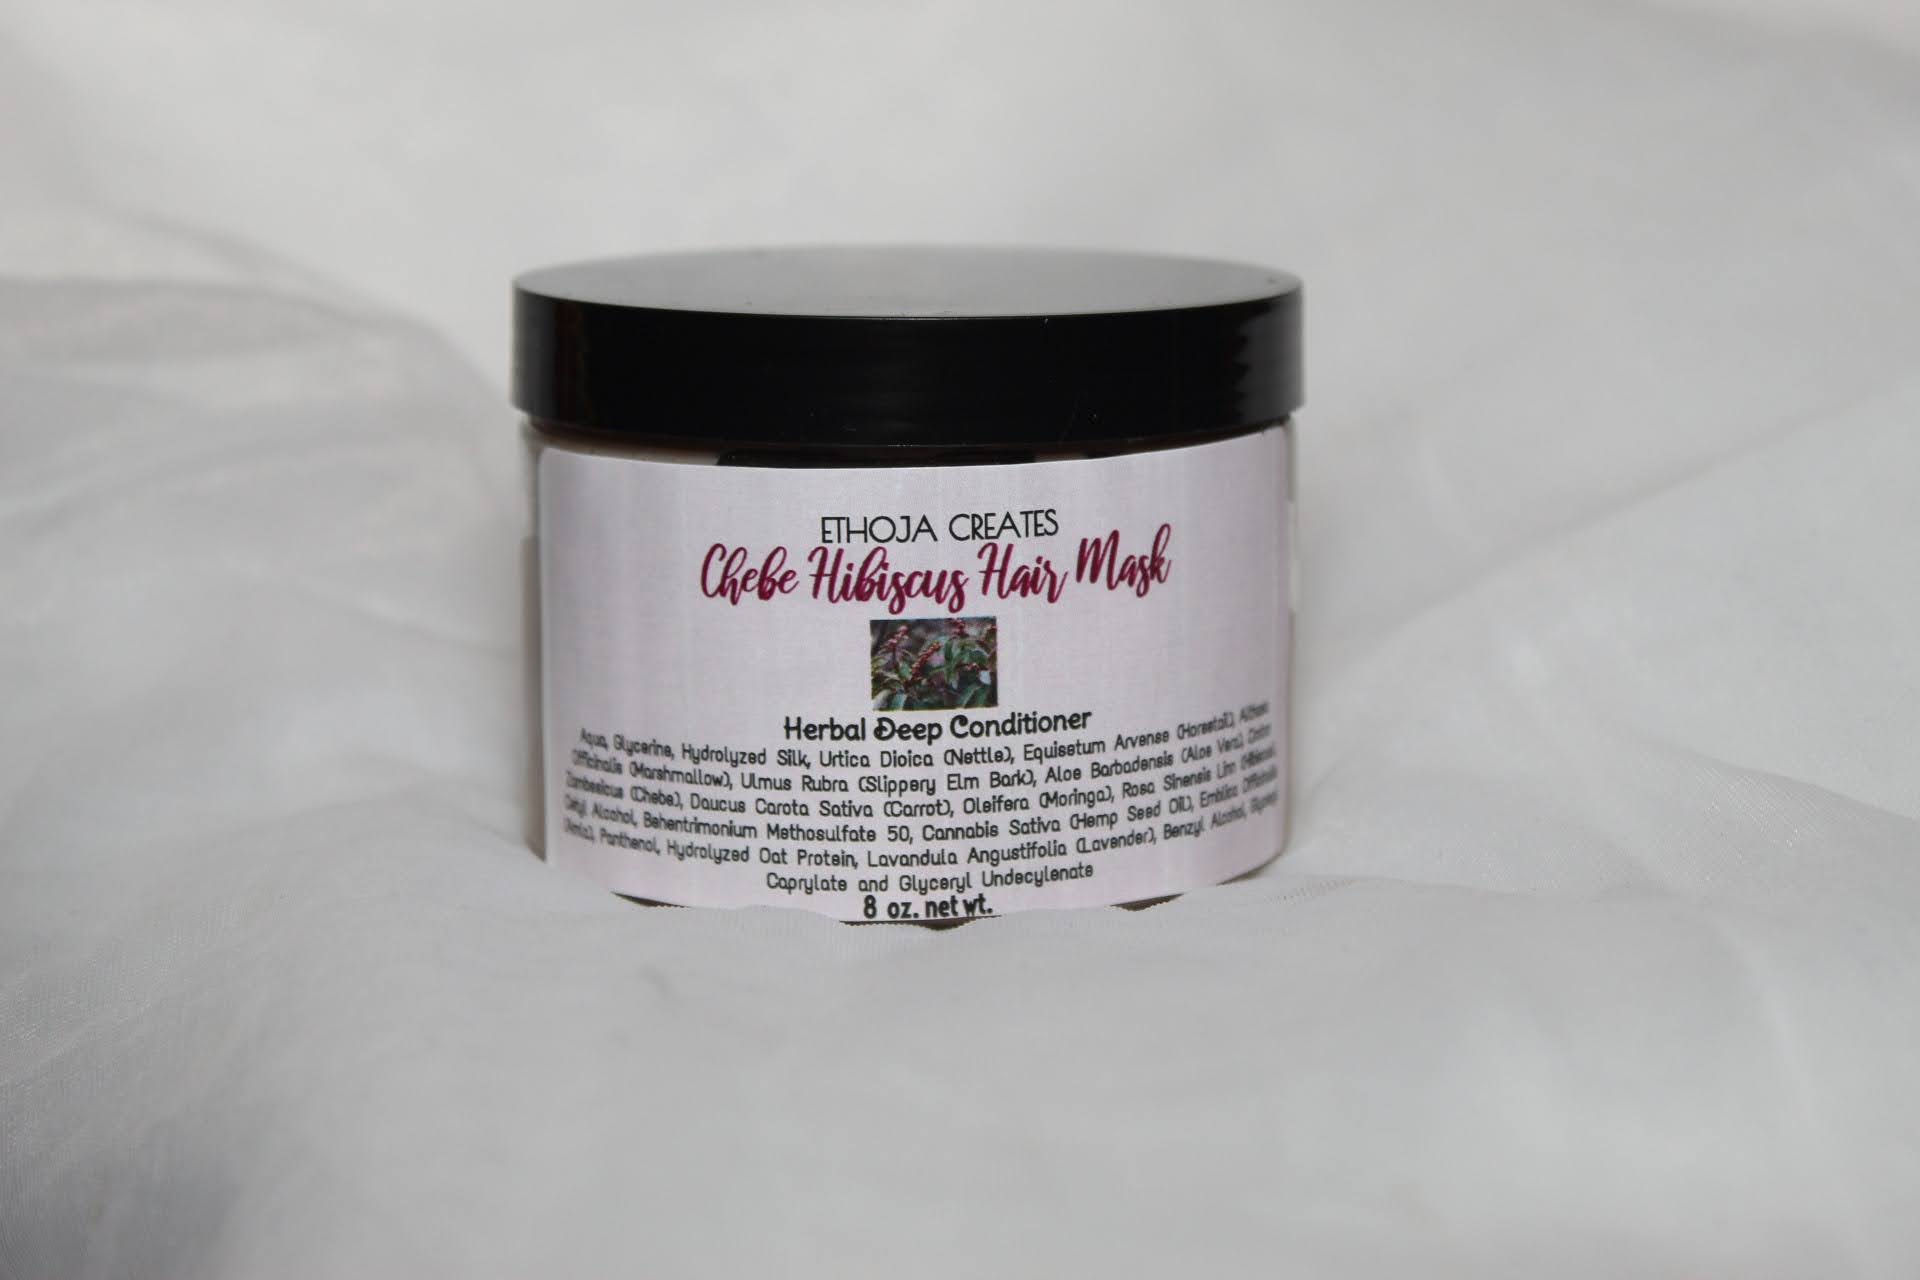 Chebe Hibiscus Hair Mask- Deep Conditioner | Ethoja Creates